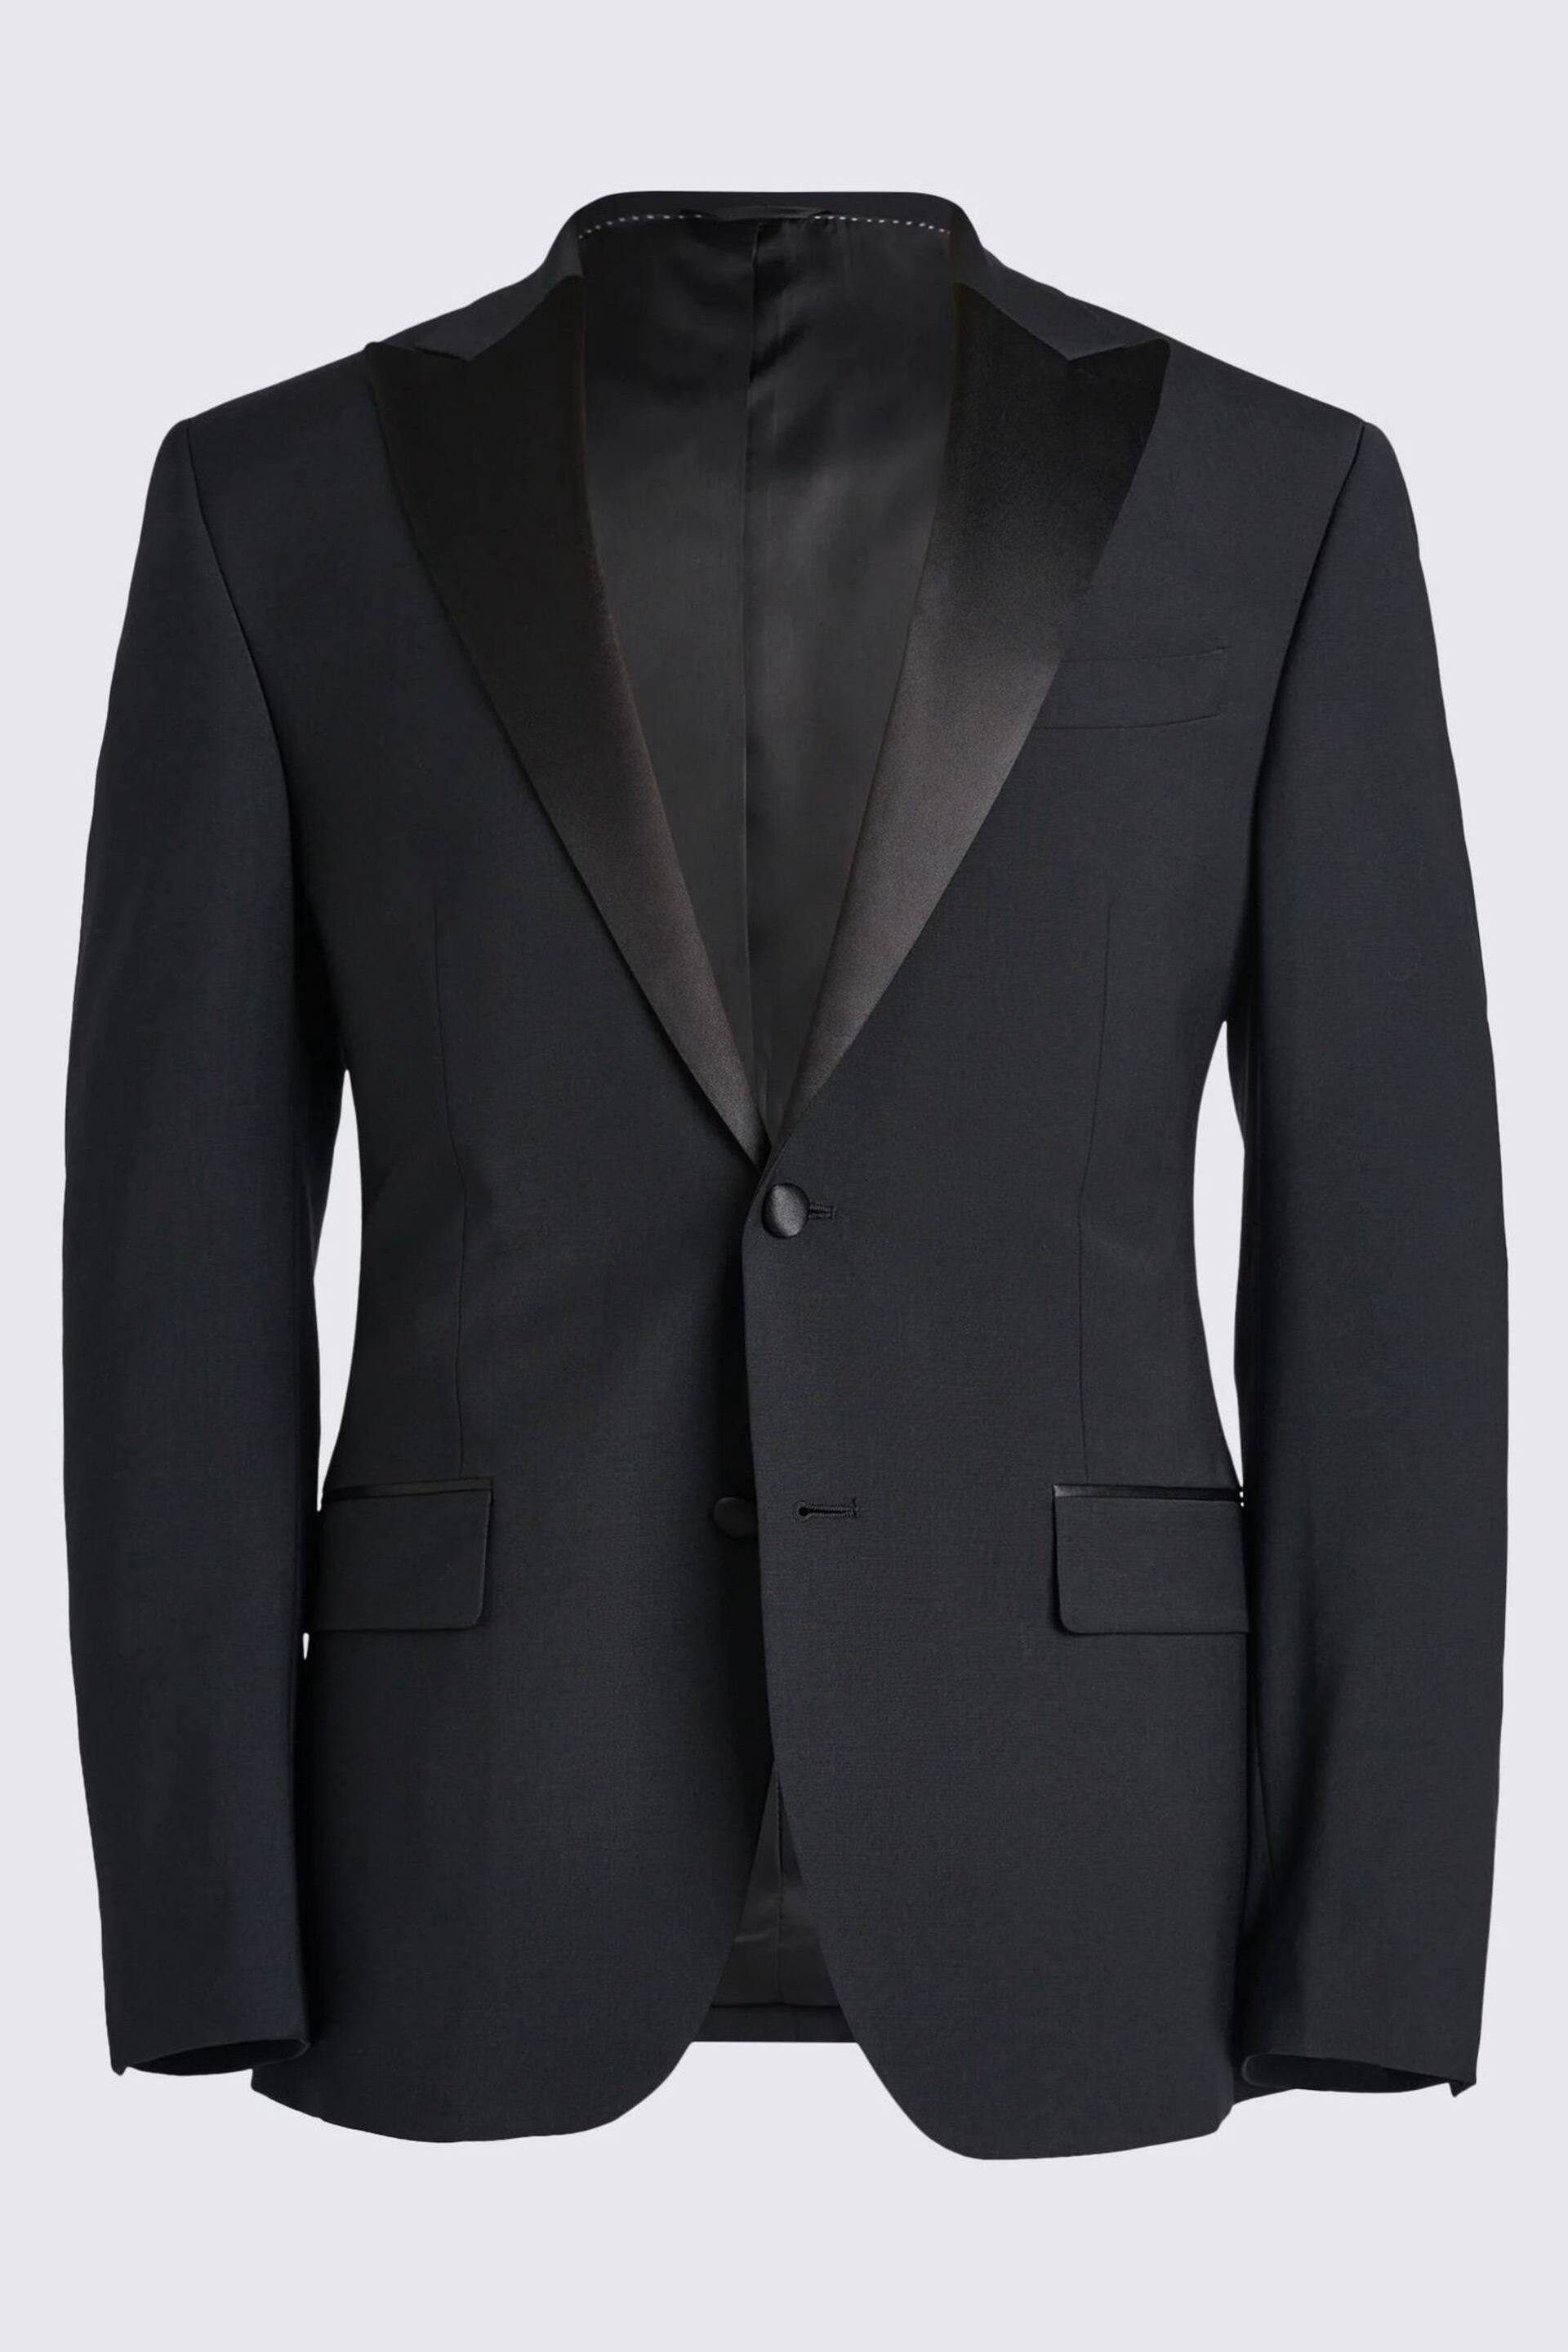 MOSS Black Tailored Fit Performance Peak Tuxedo Suit Jacket - Image 5 of 5